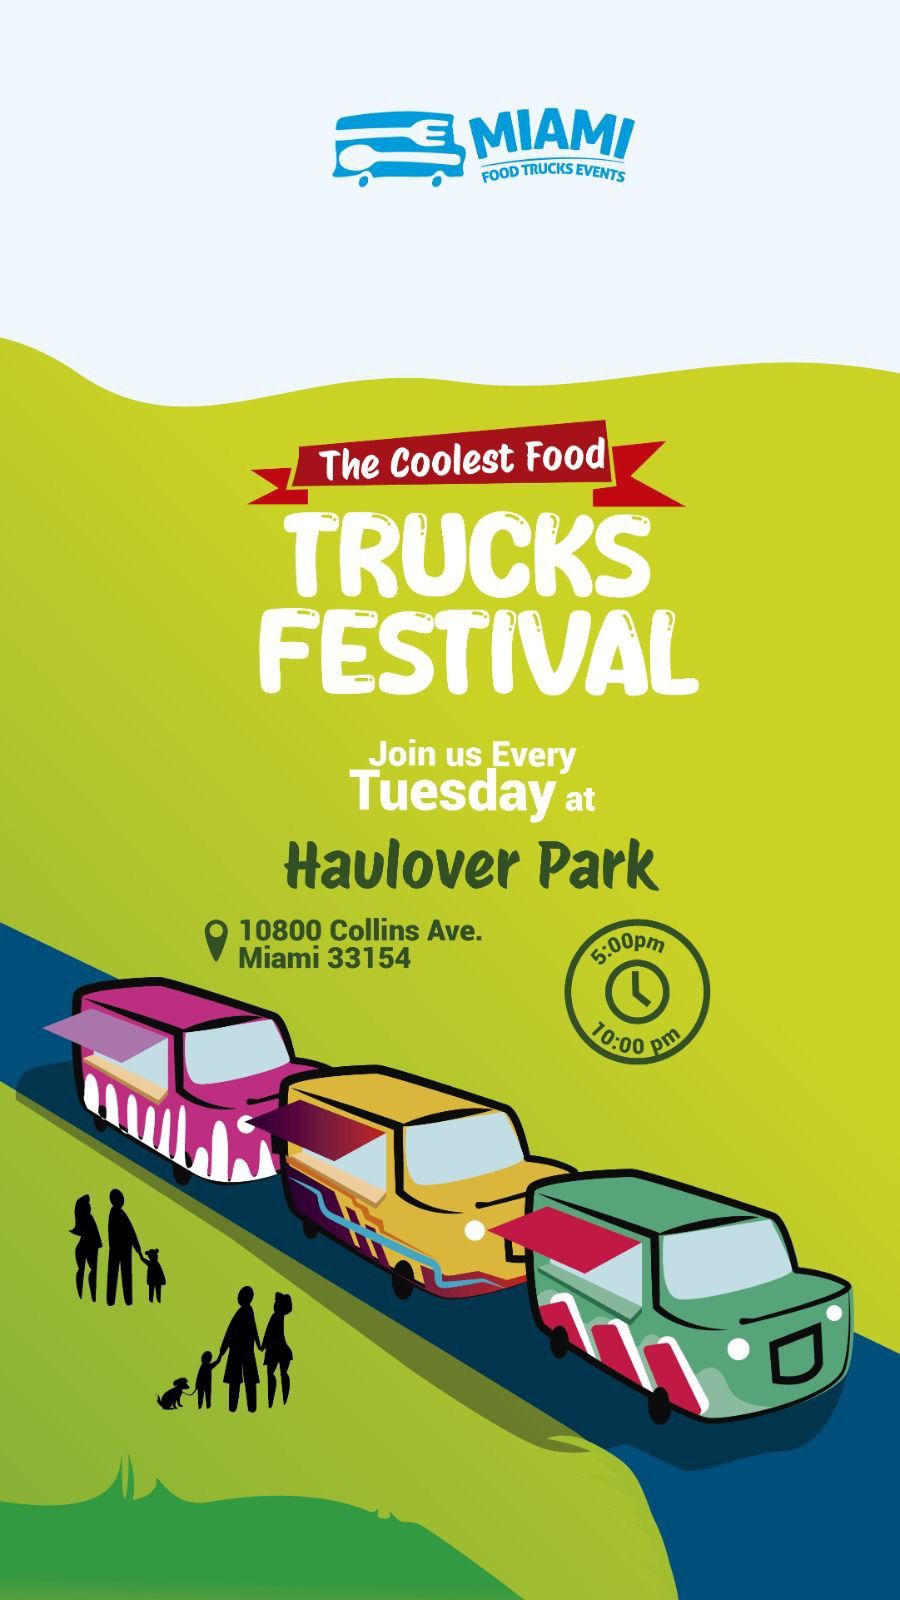 Food Trucks Tuesdays At Haulover Park